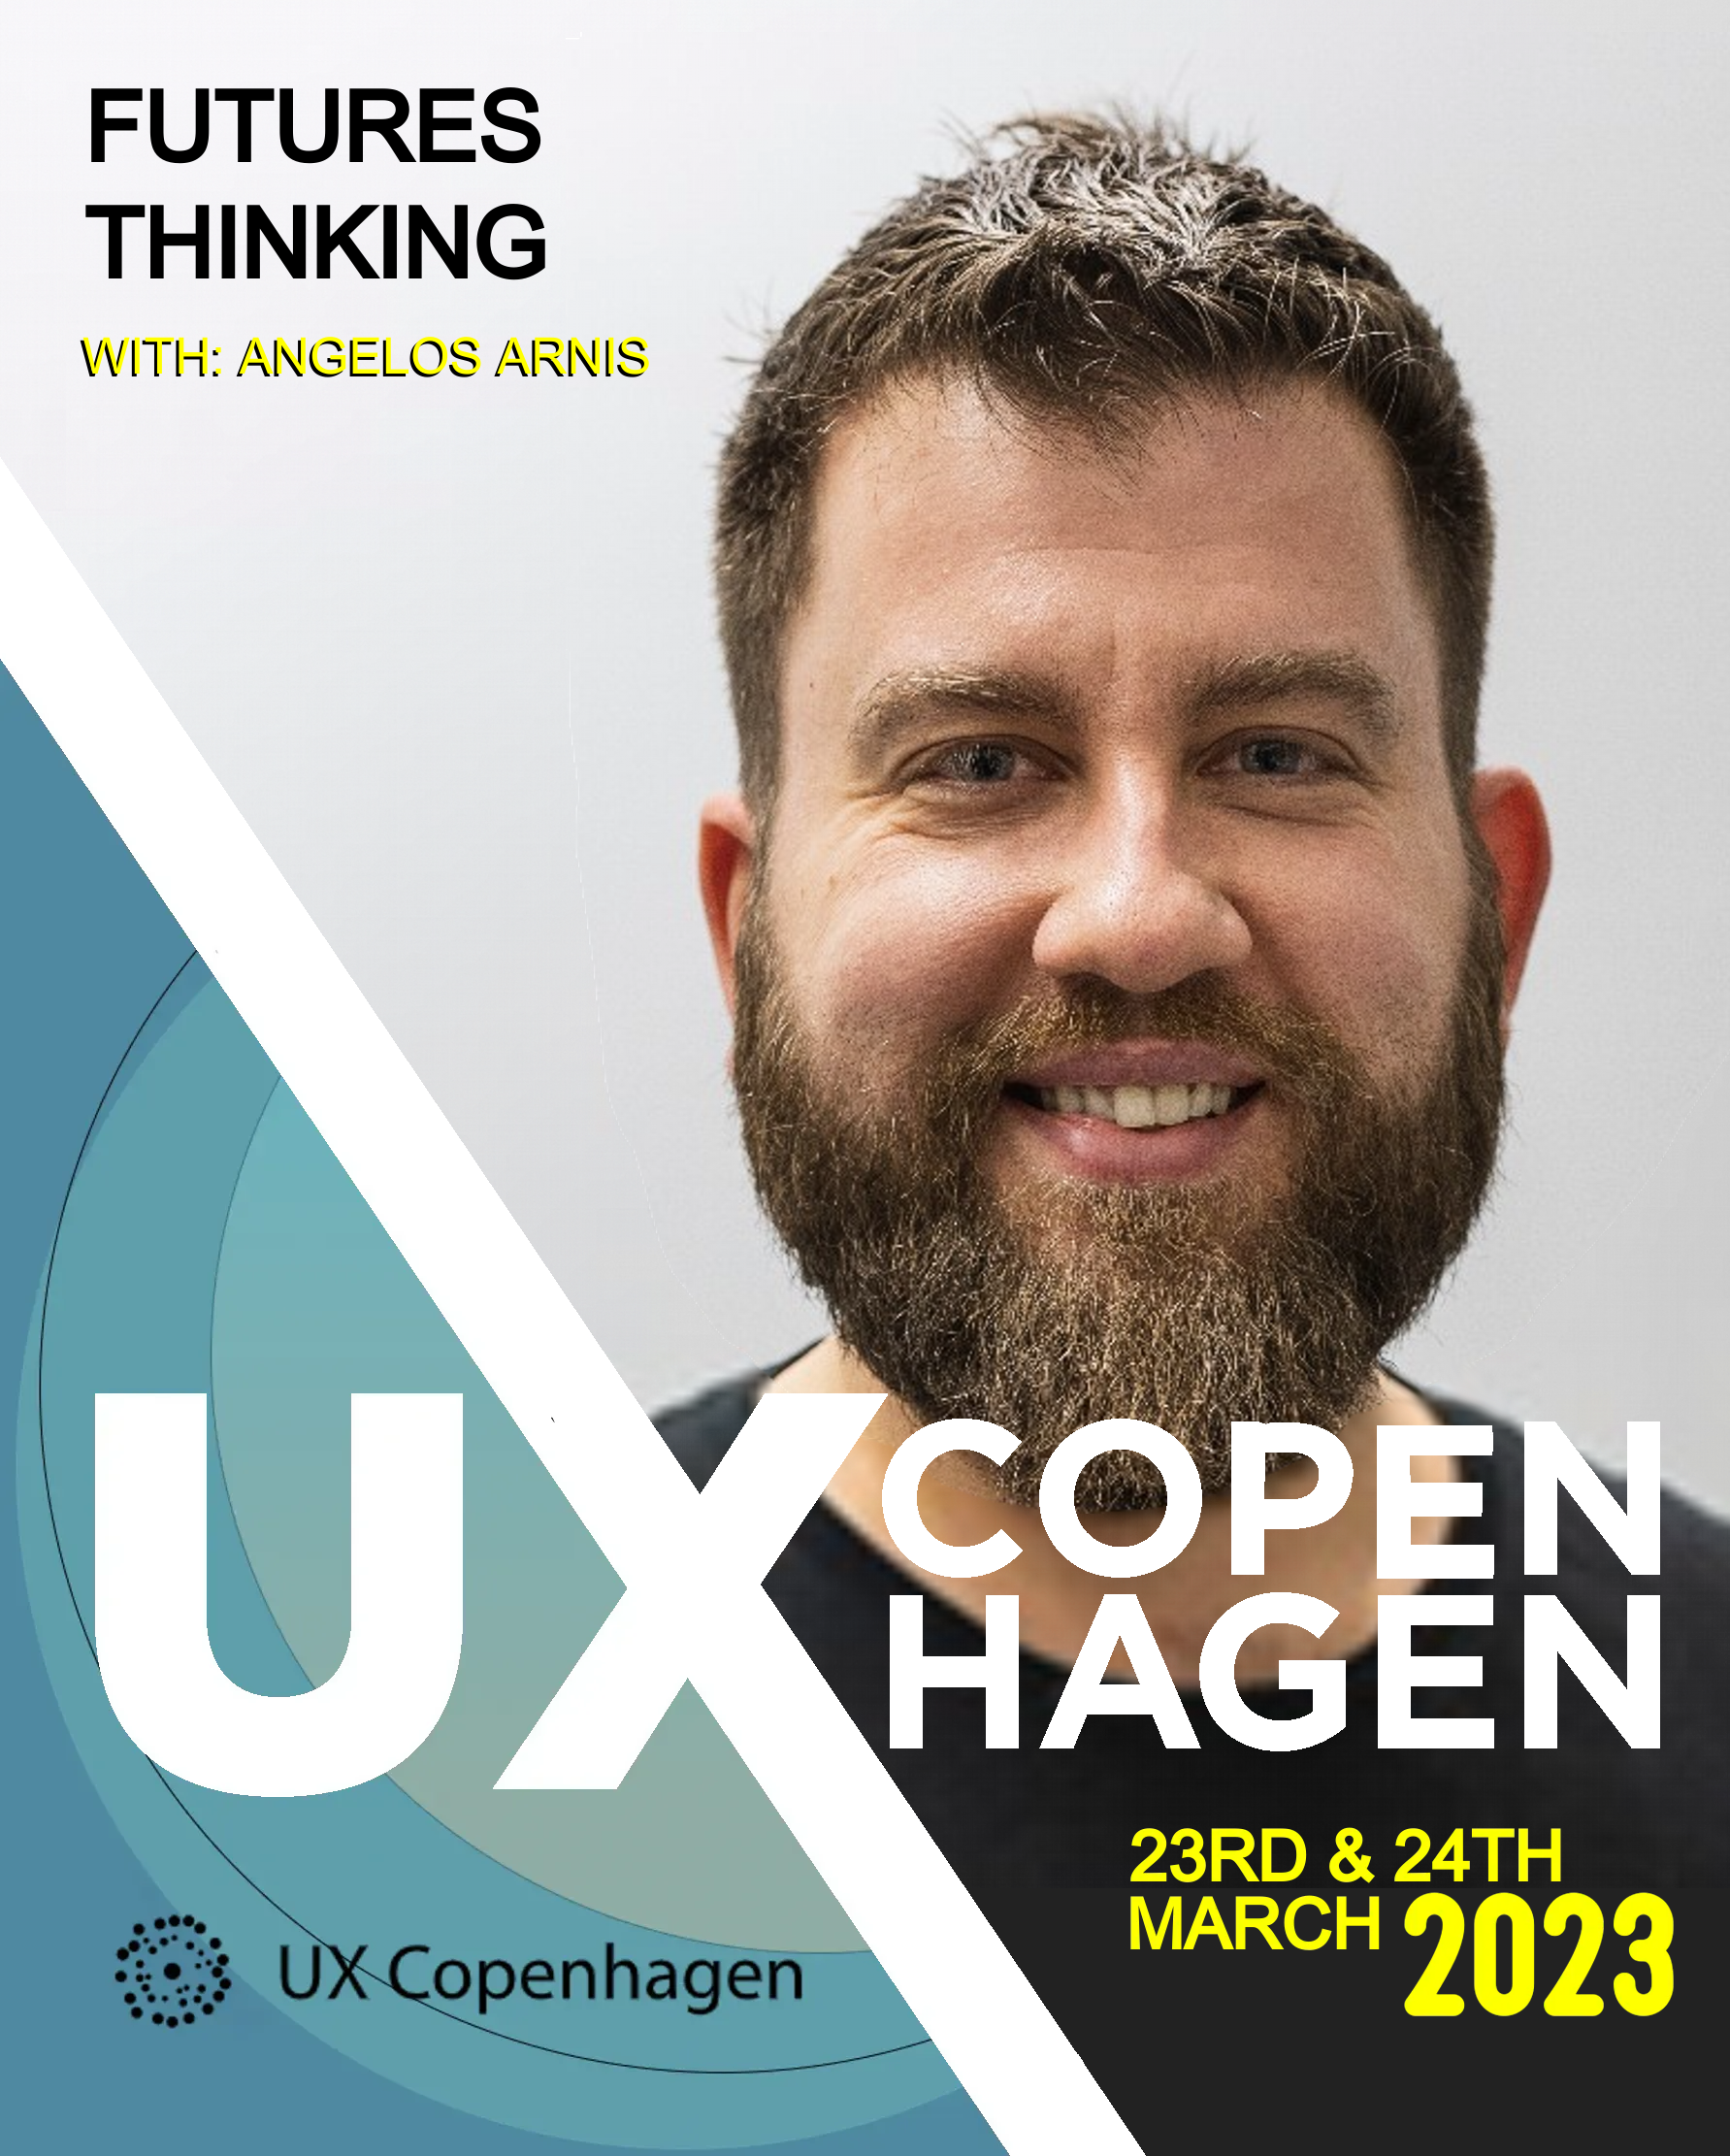 Angelos Arnis speaking at UX Copenhagen 2023